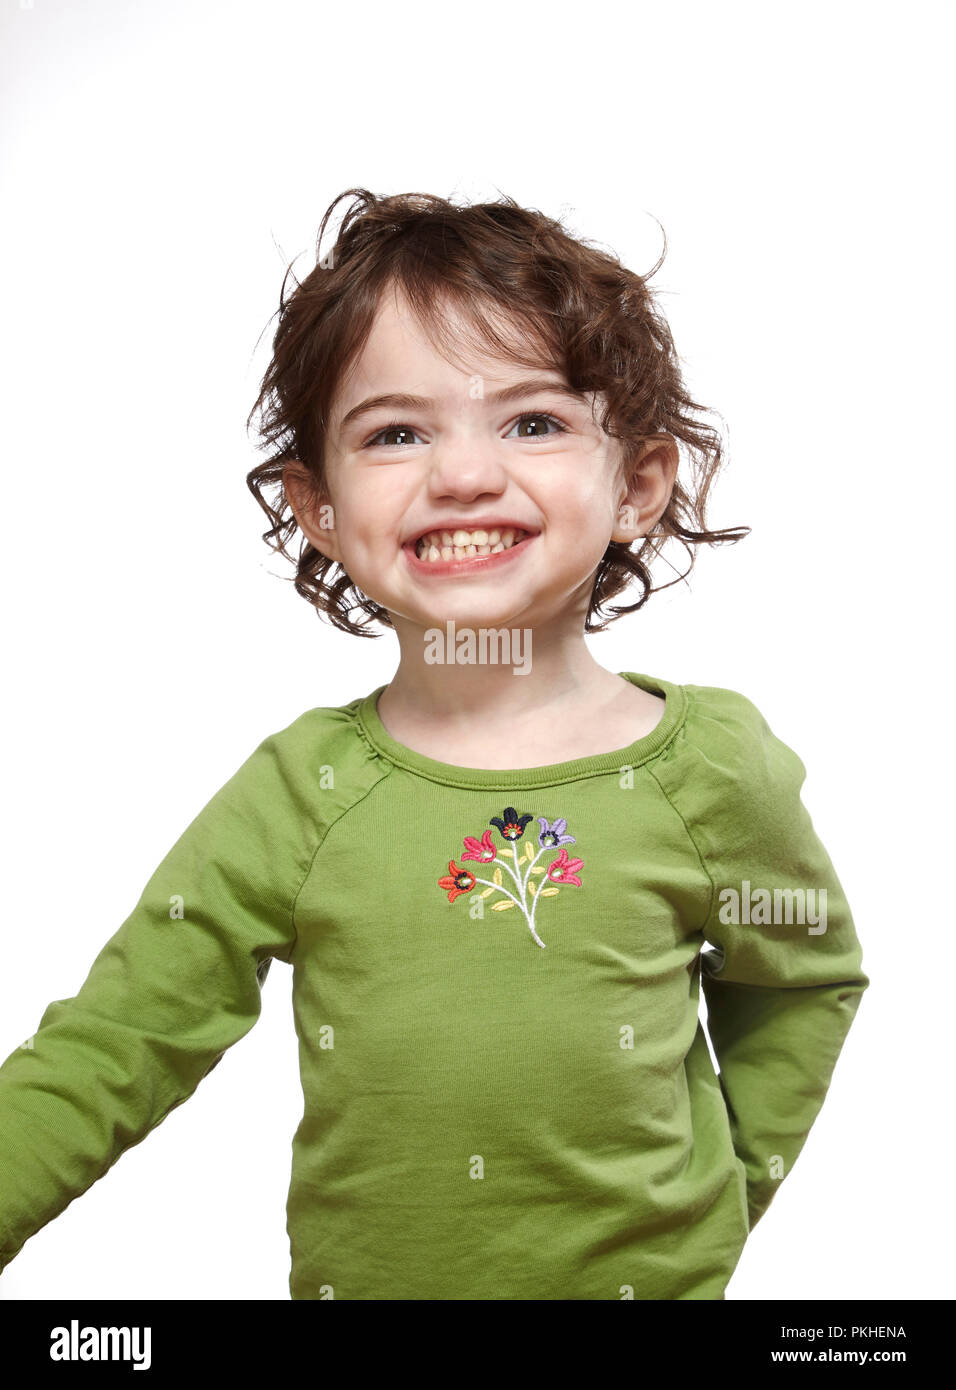 smiling toddler on white background Stock Photo